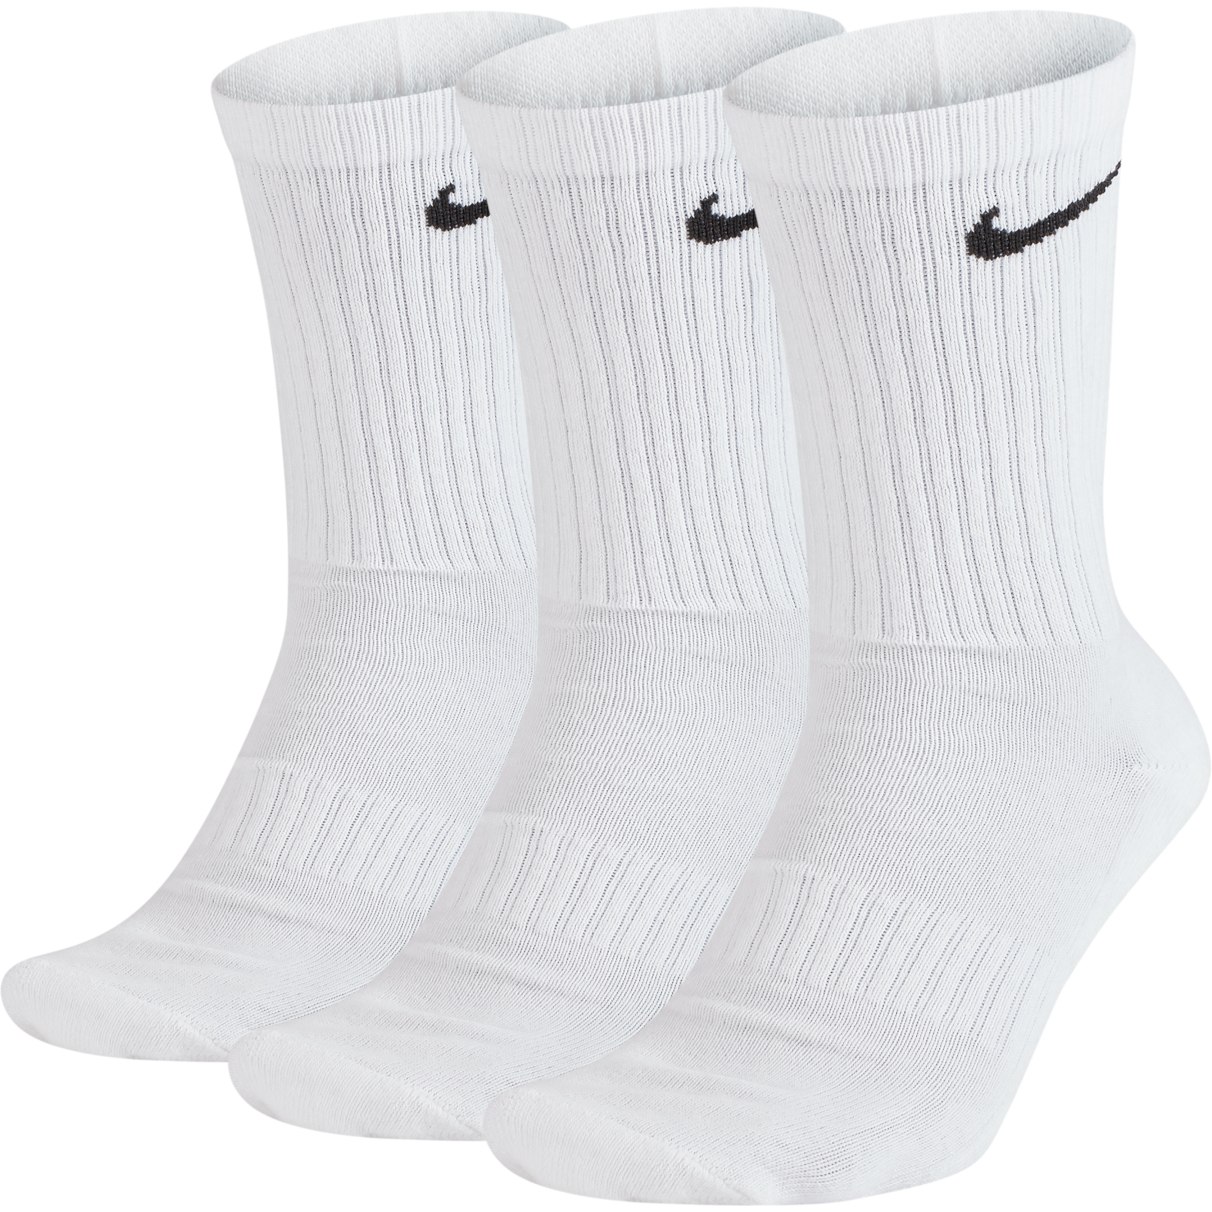 Foto de Nike Cushion Crew Calcetines (3 Pares) - Everyday - blanco/negro SX7664-100